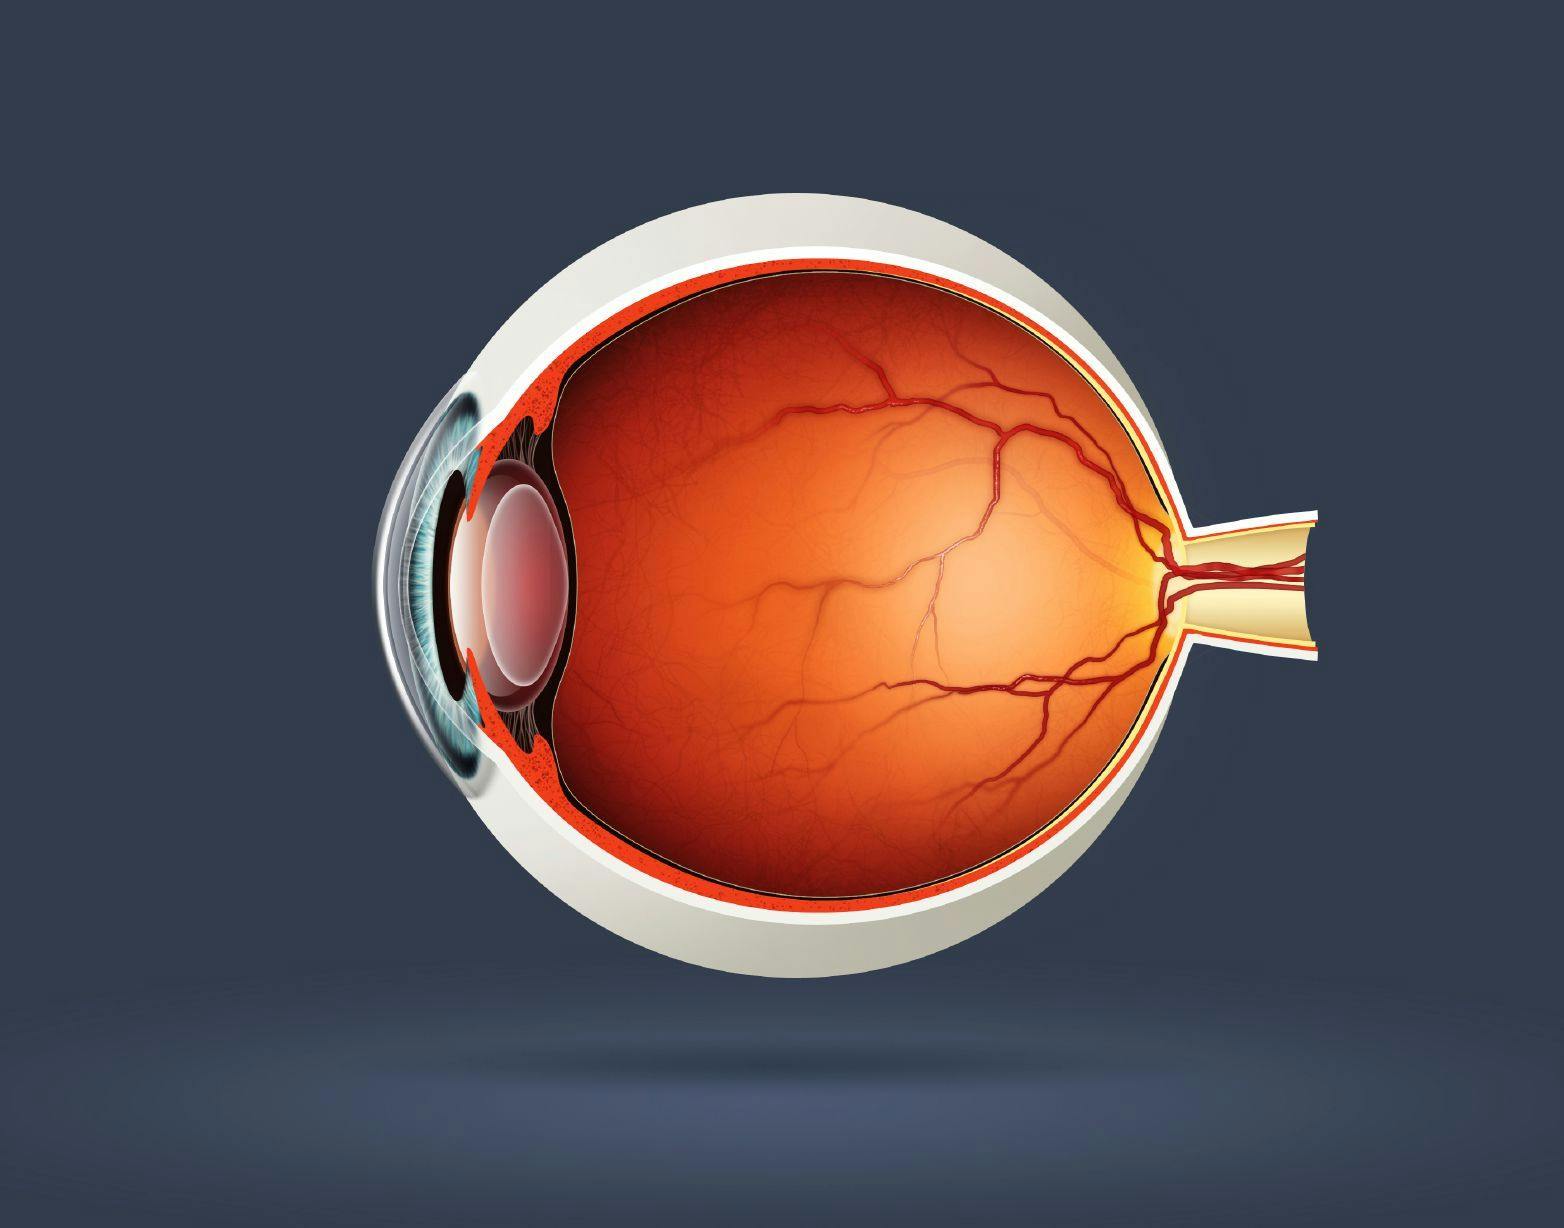 Human eye cross section | Image credit: nrbk - stock.adobe.com